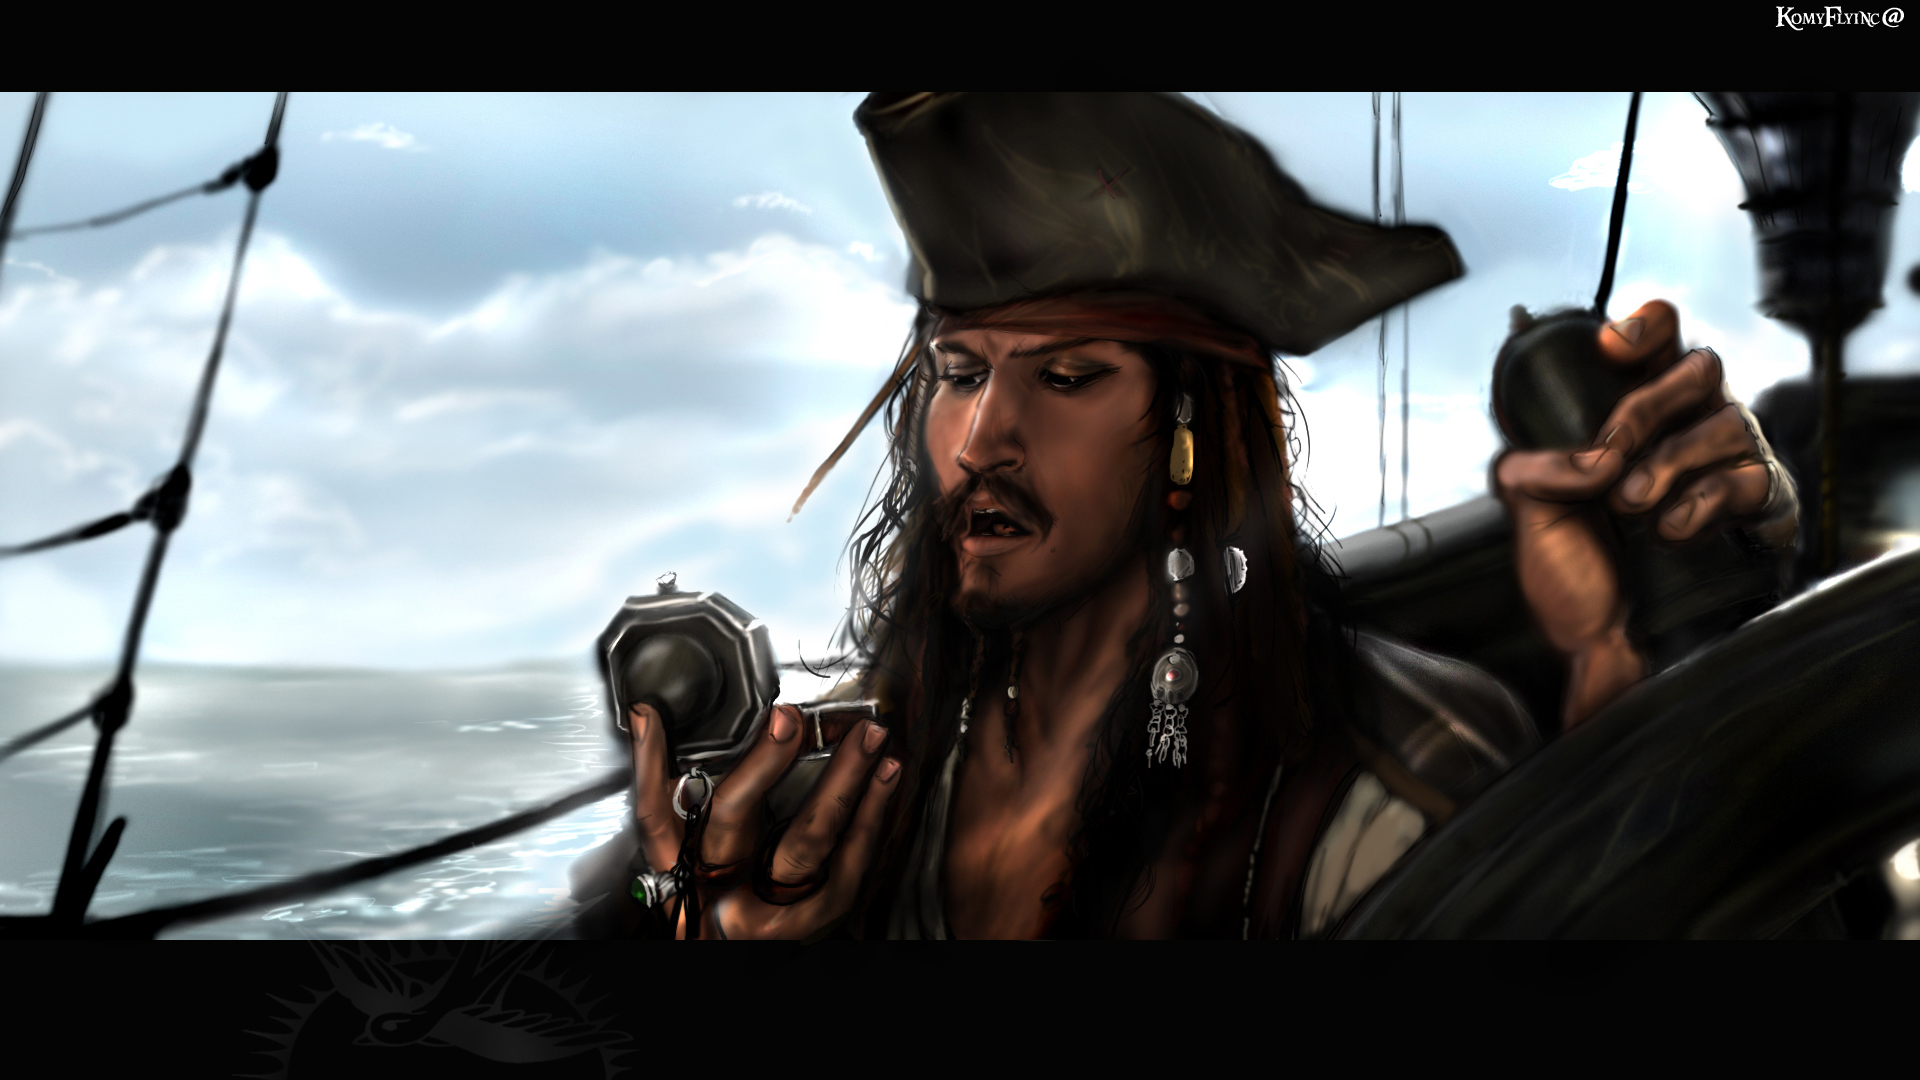 Включи пираты кари. Пираты Карибского моря Джек Воробей. Капитан Джек Воробей черная Жемчужина. Капитан Джек Воробей на корабле чёрная Жемчужина.